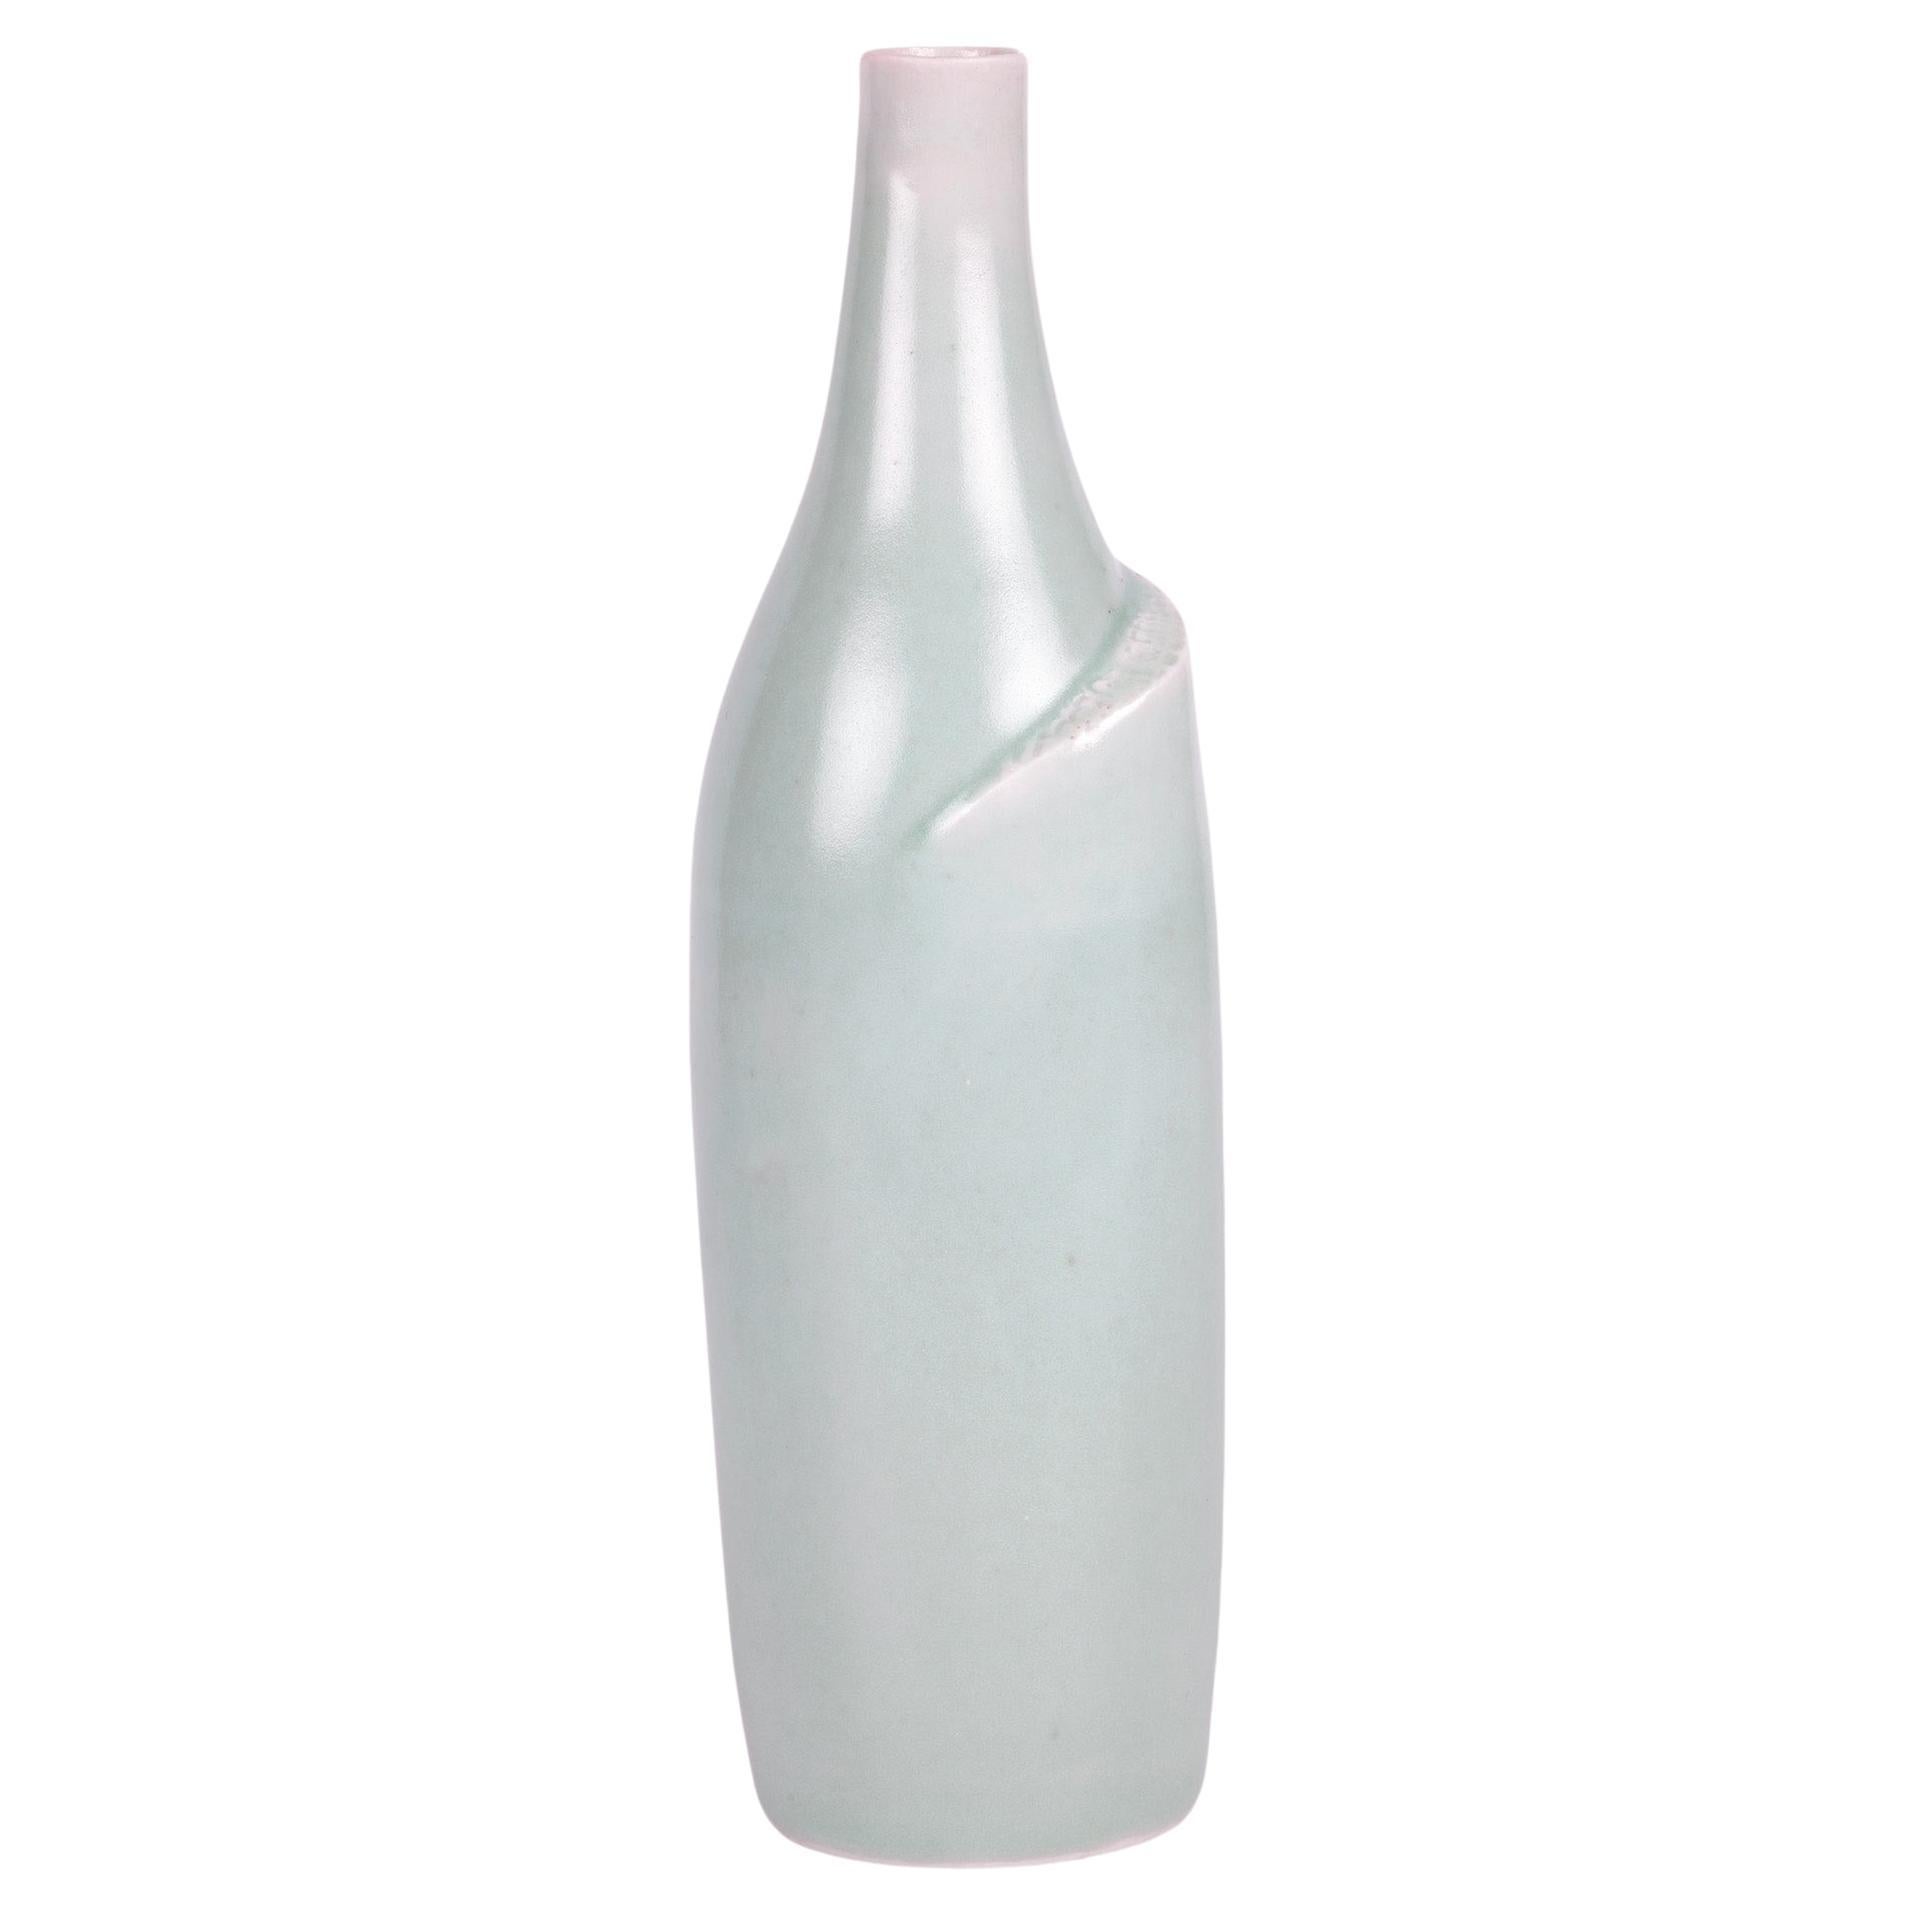 Sonia Lewis Studio Ceramic Celadon Glazed Bottle Vase For Sale